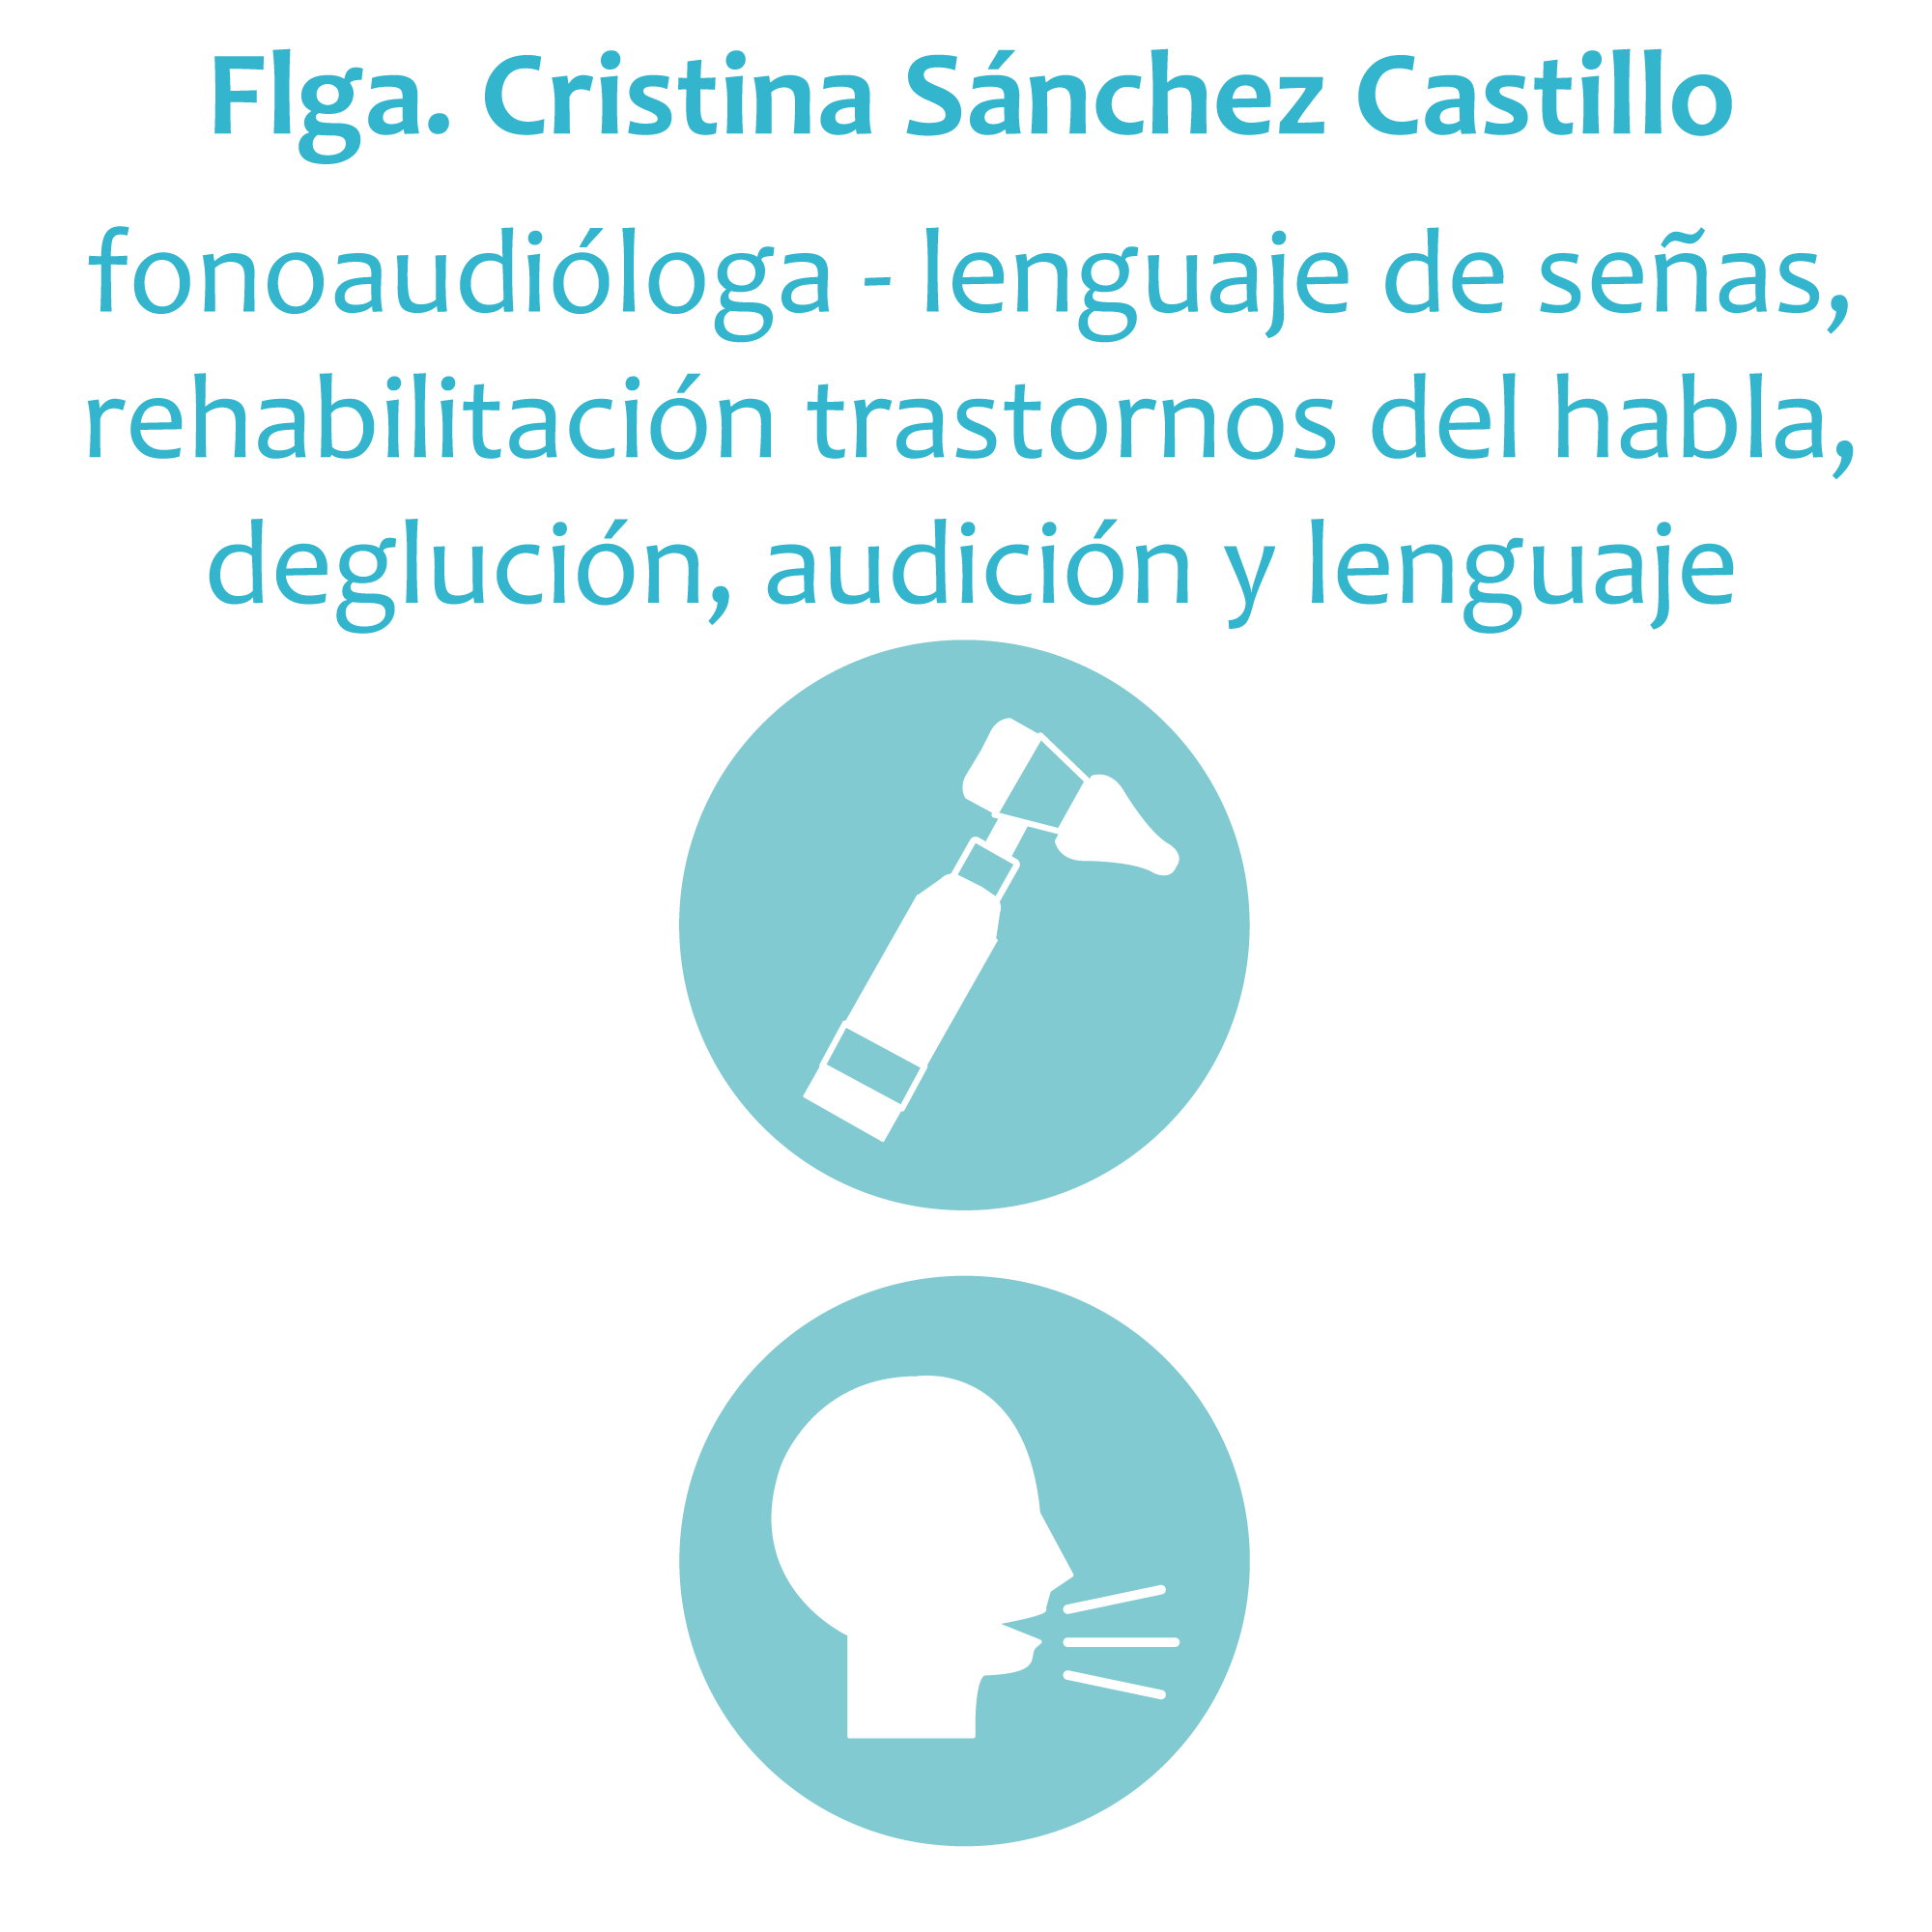 Flga. Cristina Sánchez Castillo